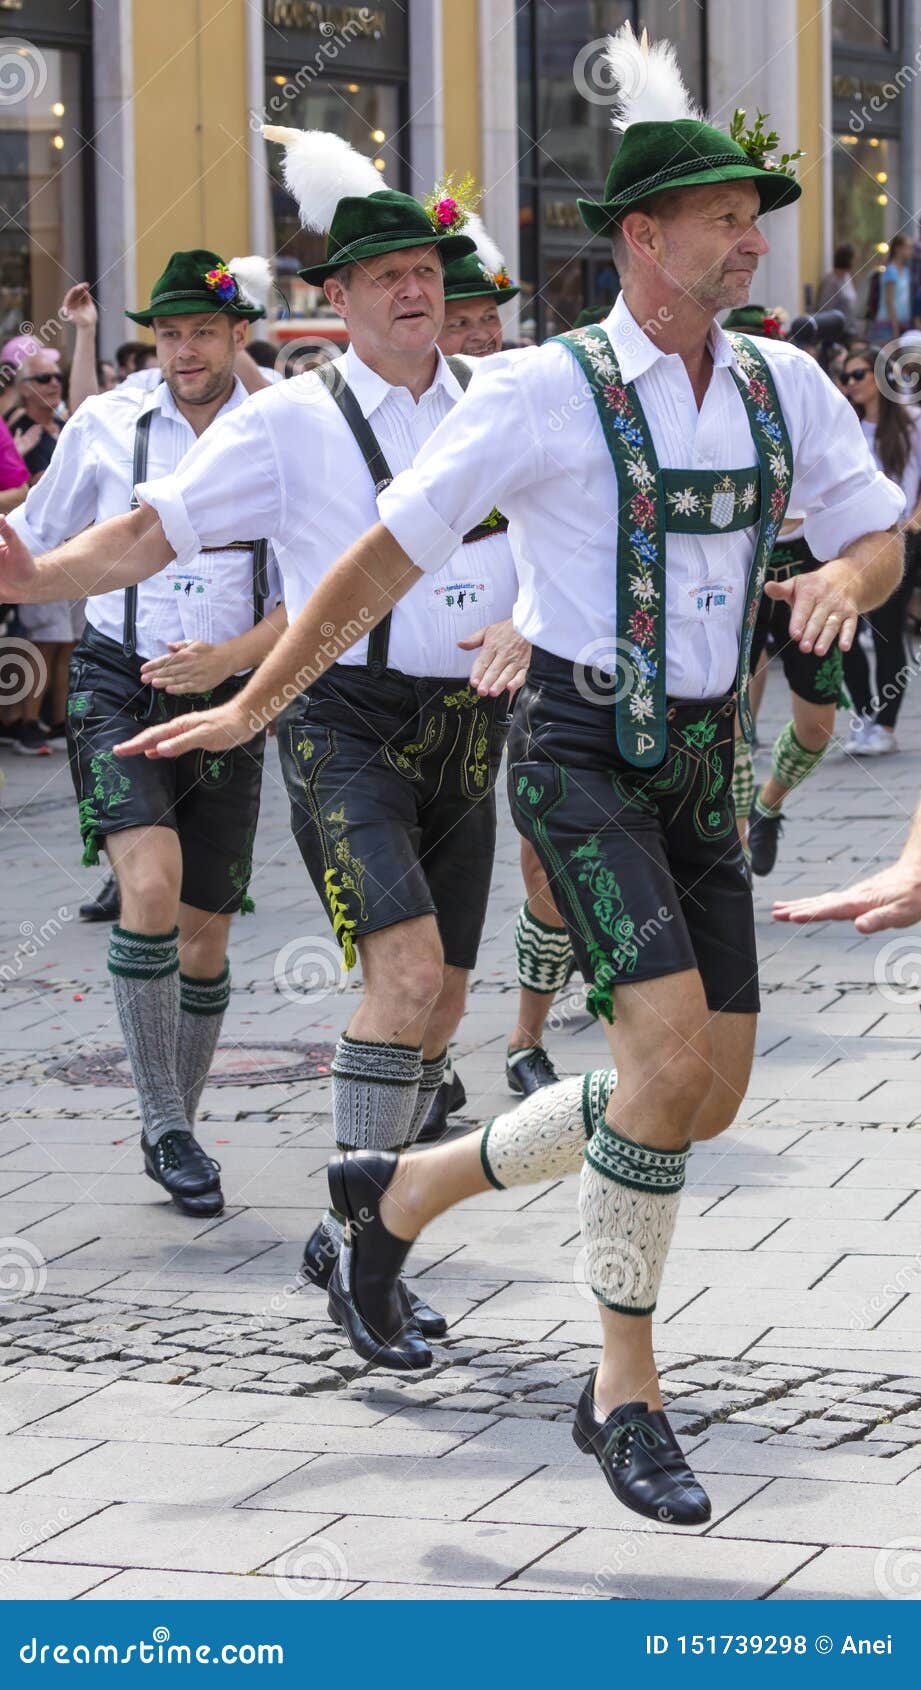 Gay lederhosen Austrian Lederhosen: